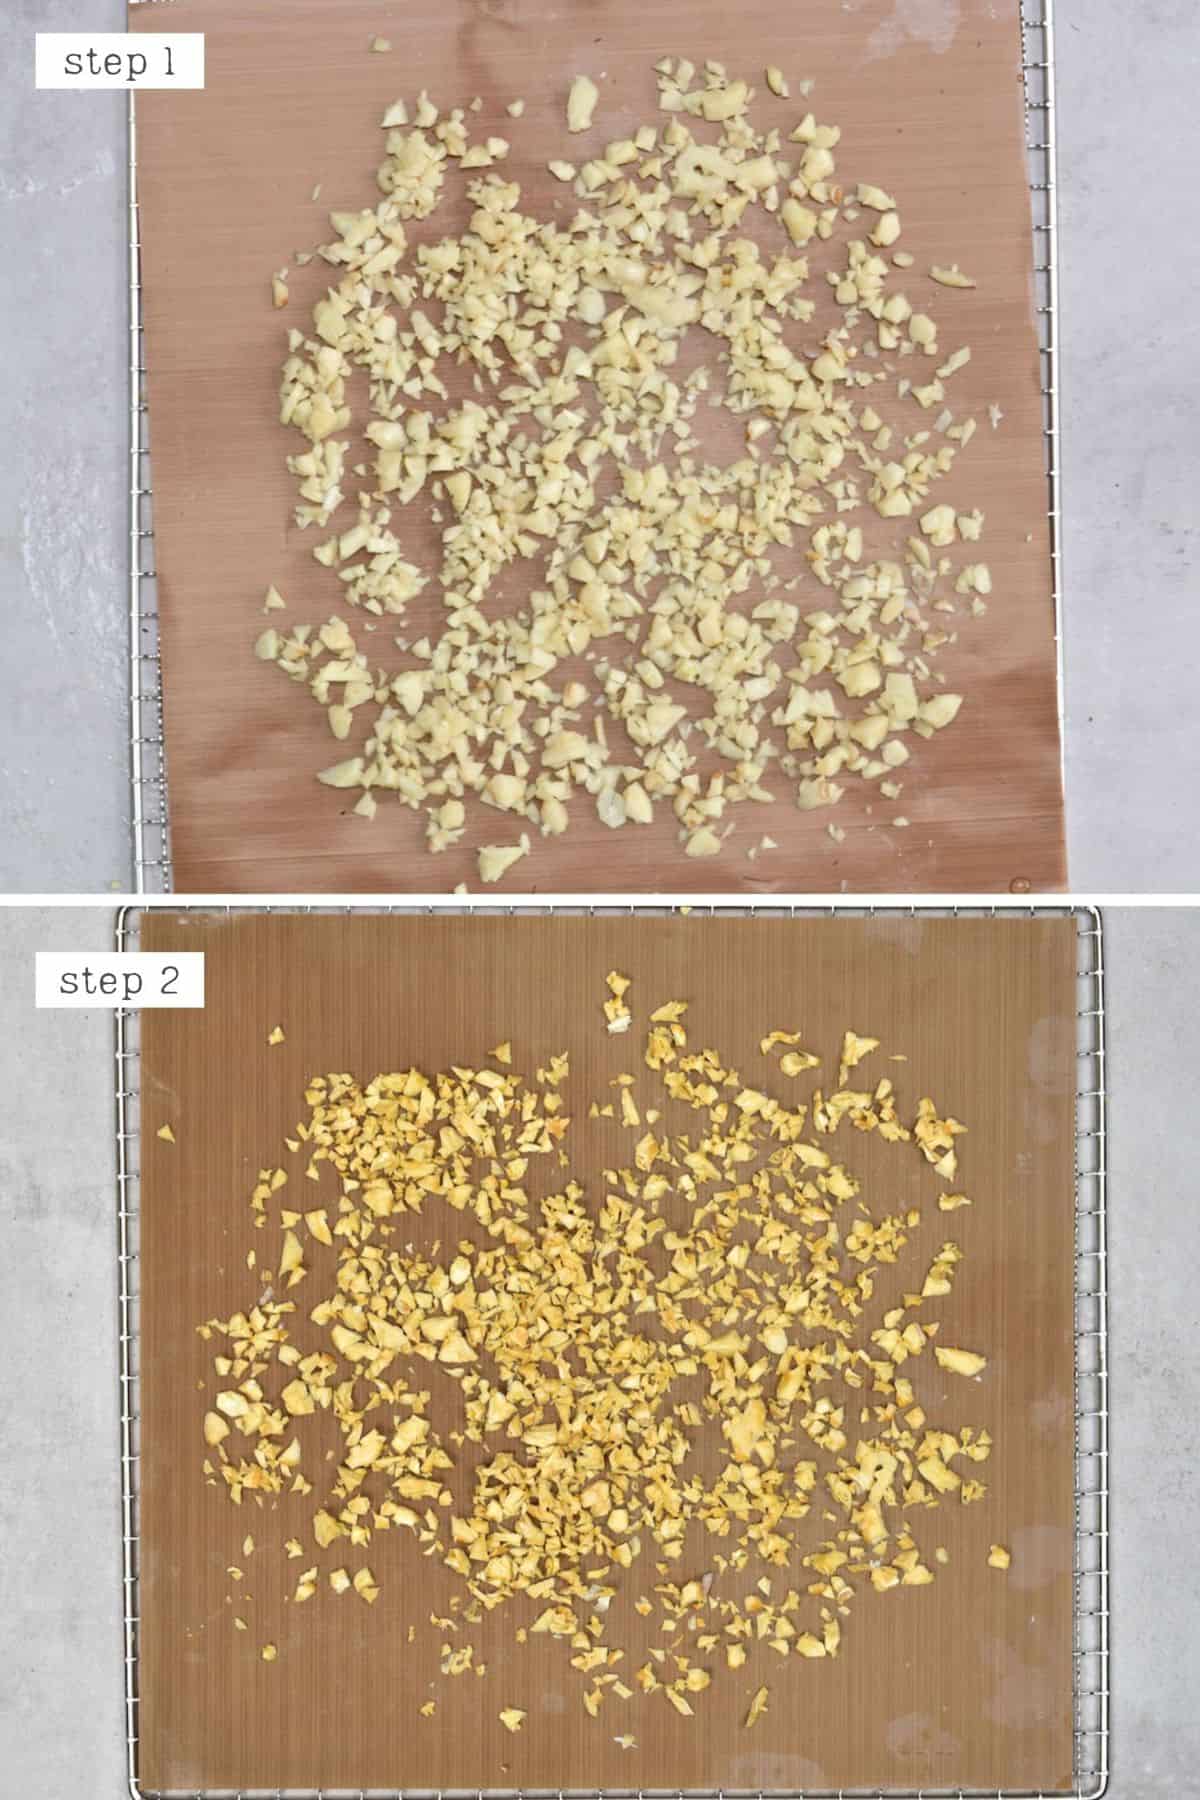 Steps for dehydrating minced garlic